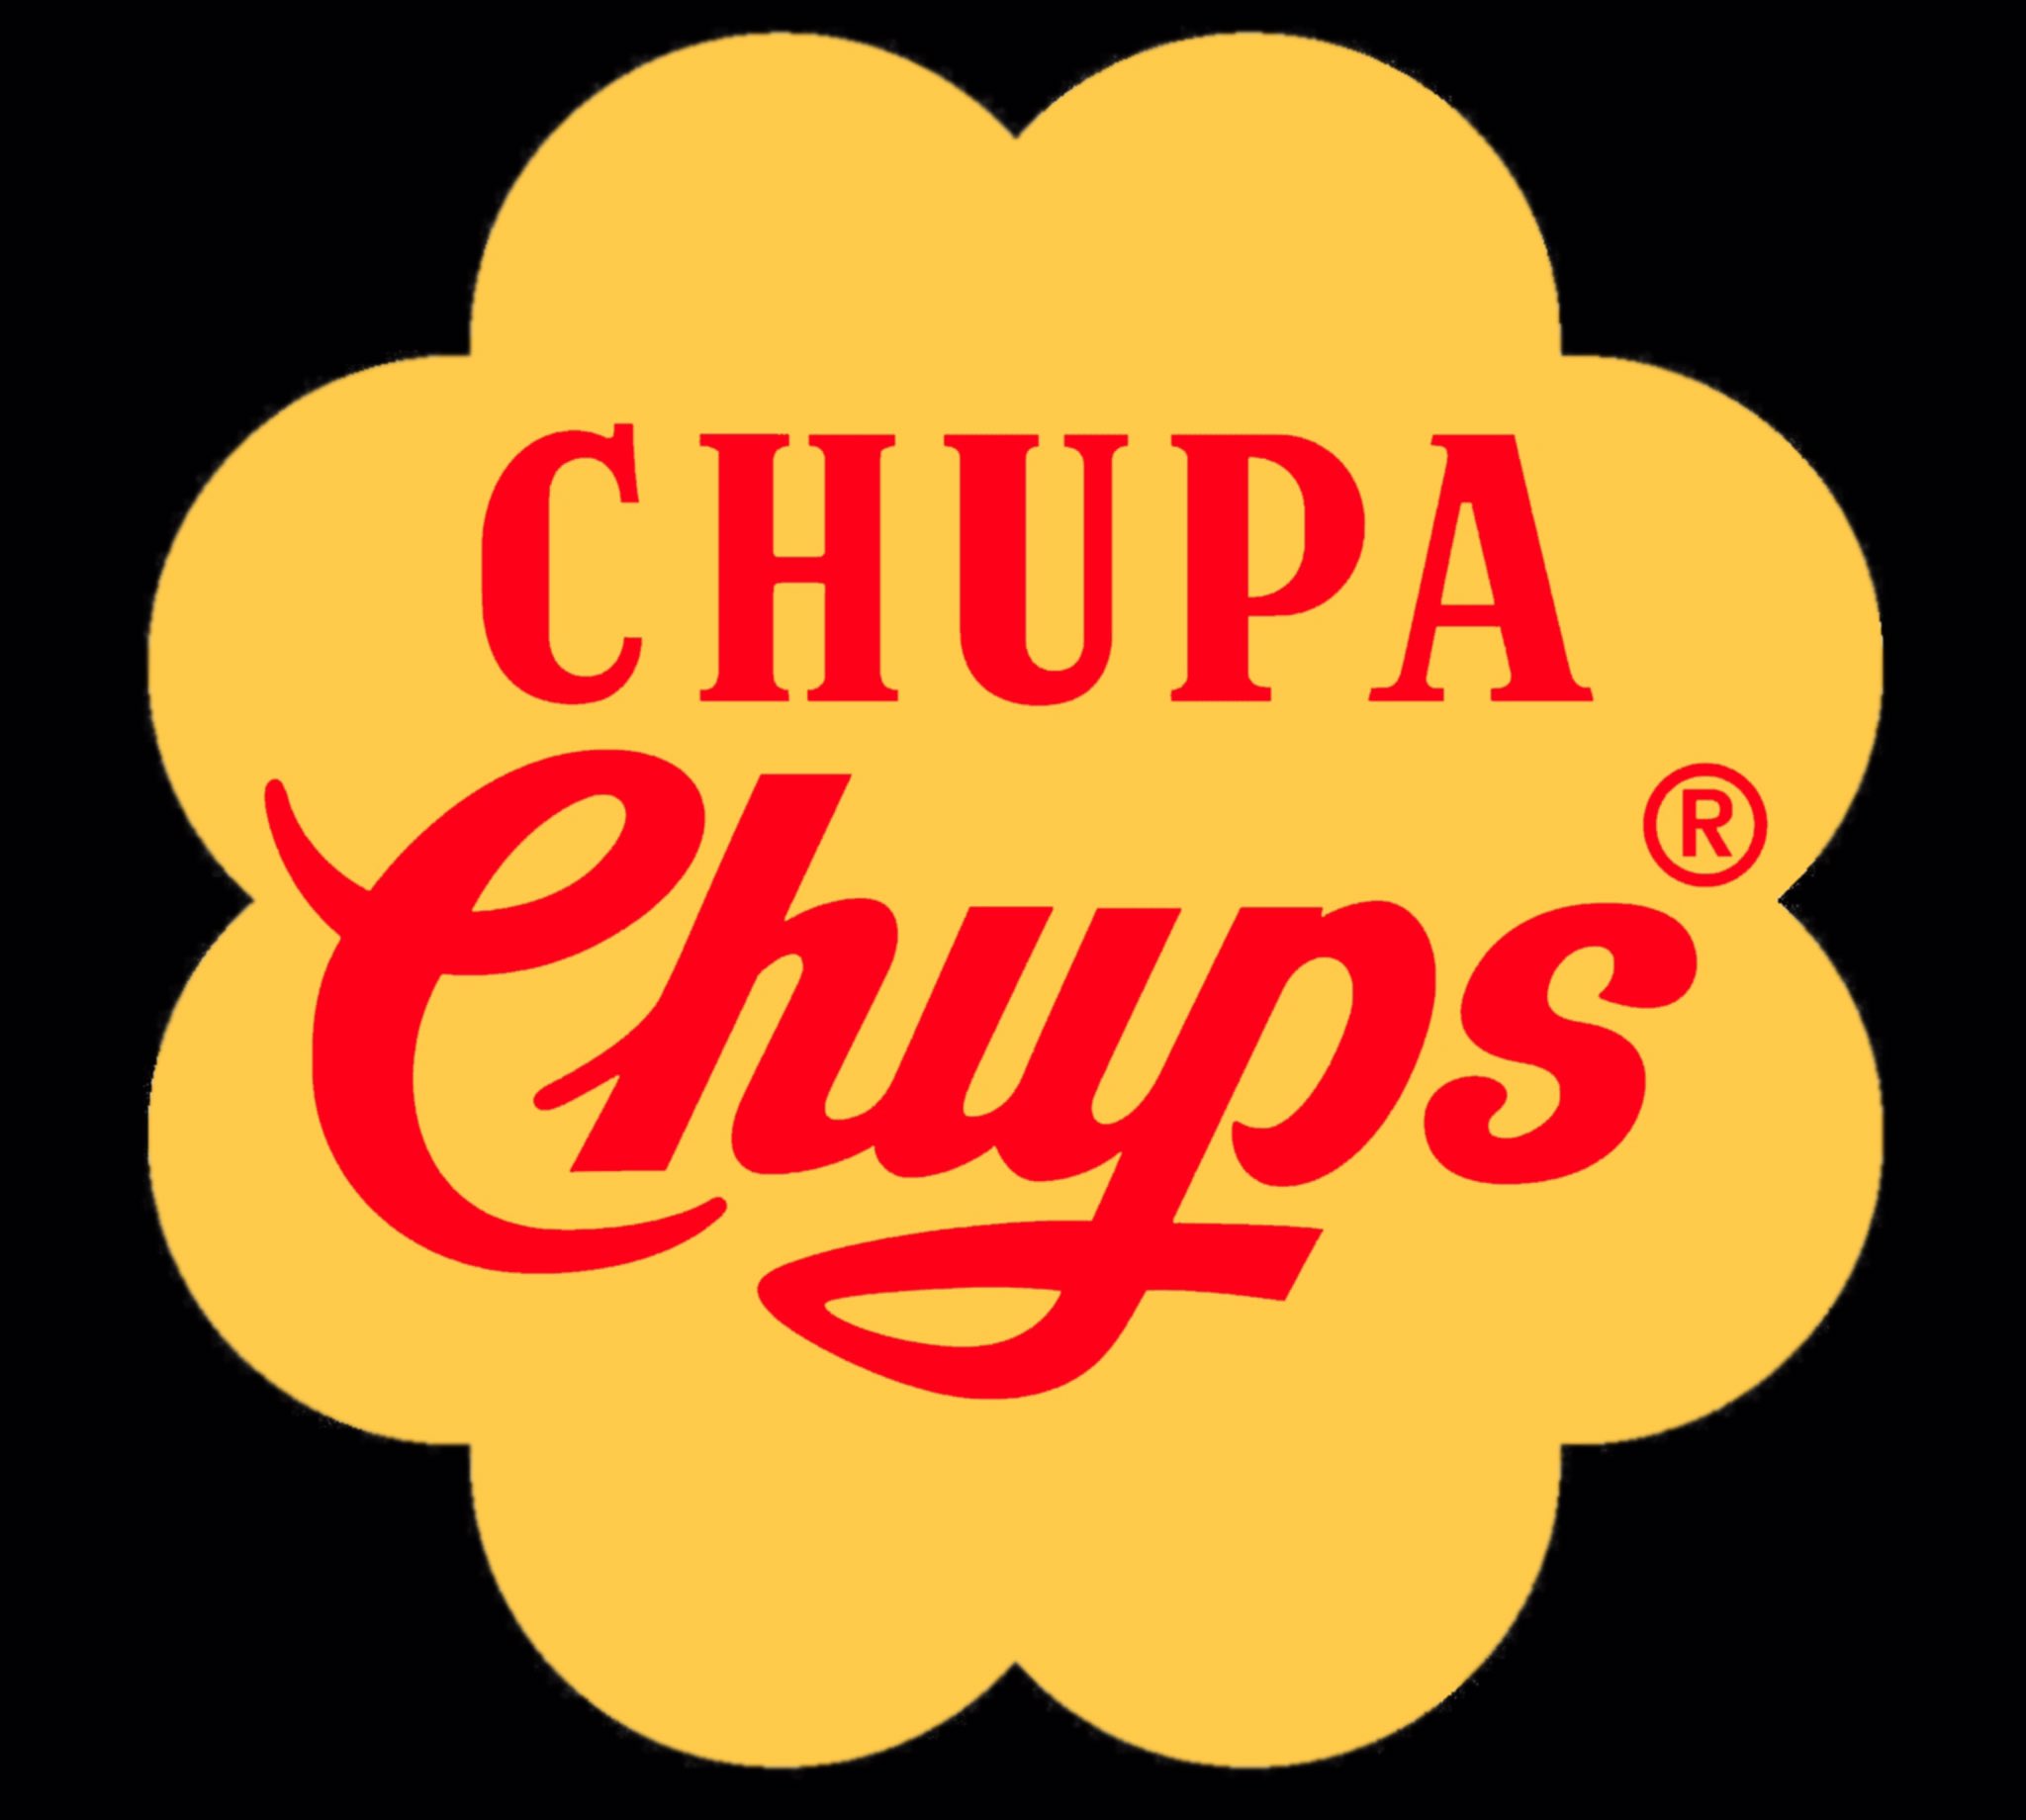 WEIRDLAND TV on X: "The Chupa Chups logo as designed by Salvador Dalí in  1969. https://t.co/WRiQboNwgd" / X